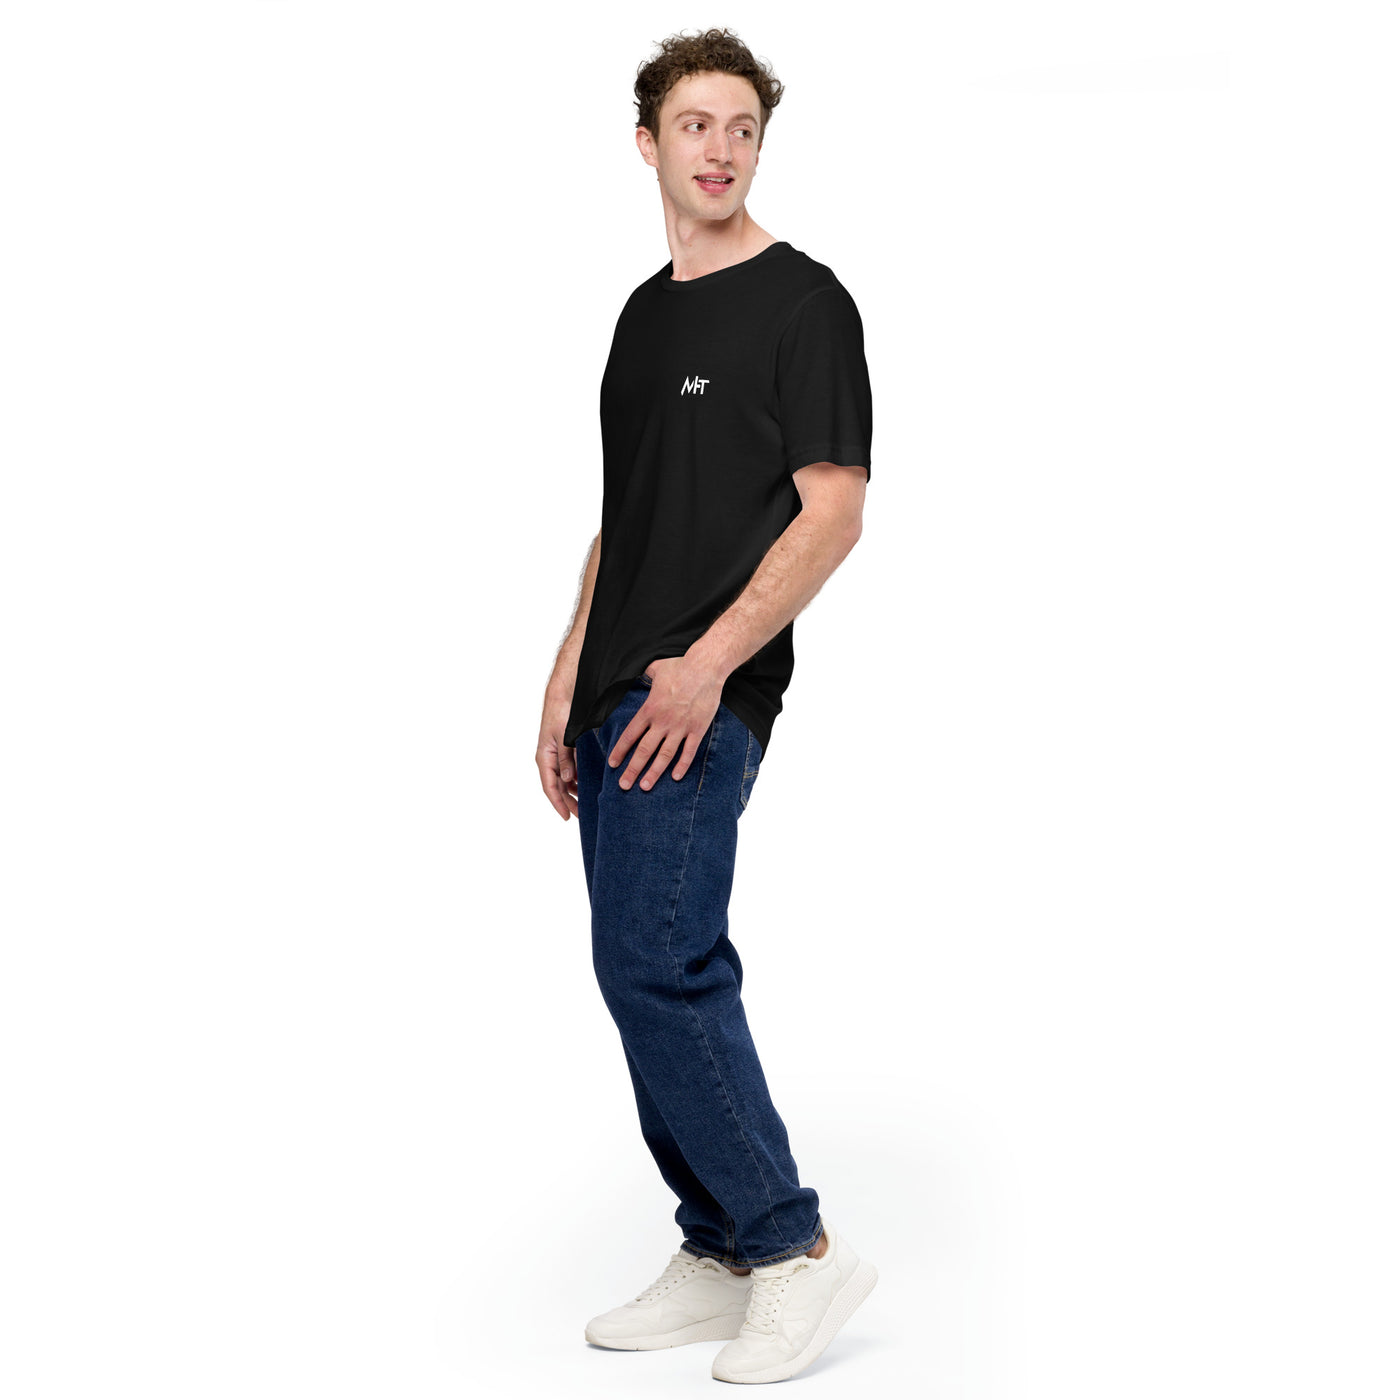 Coder - Unisex t-shirt (back print)